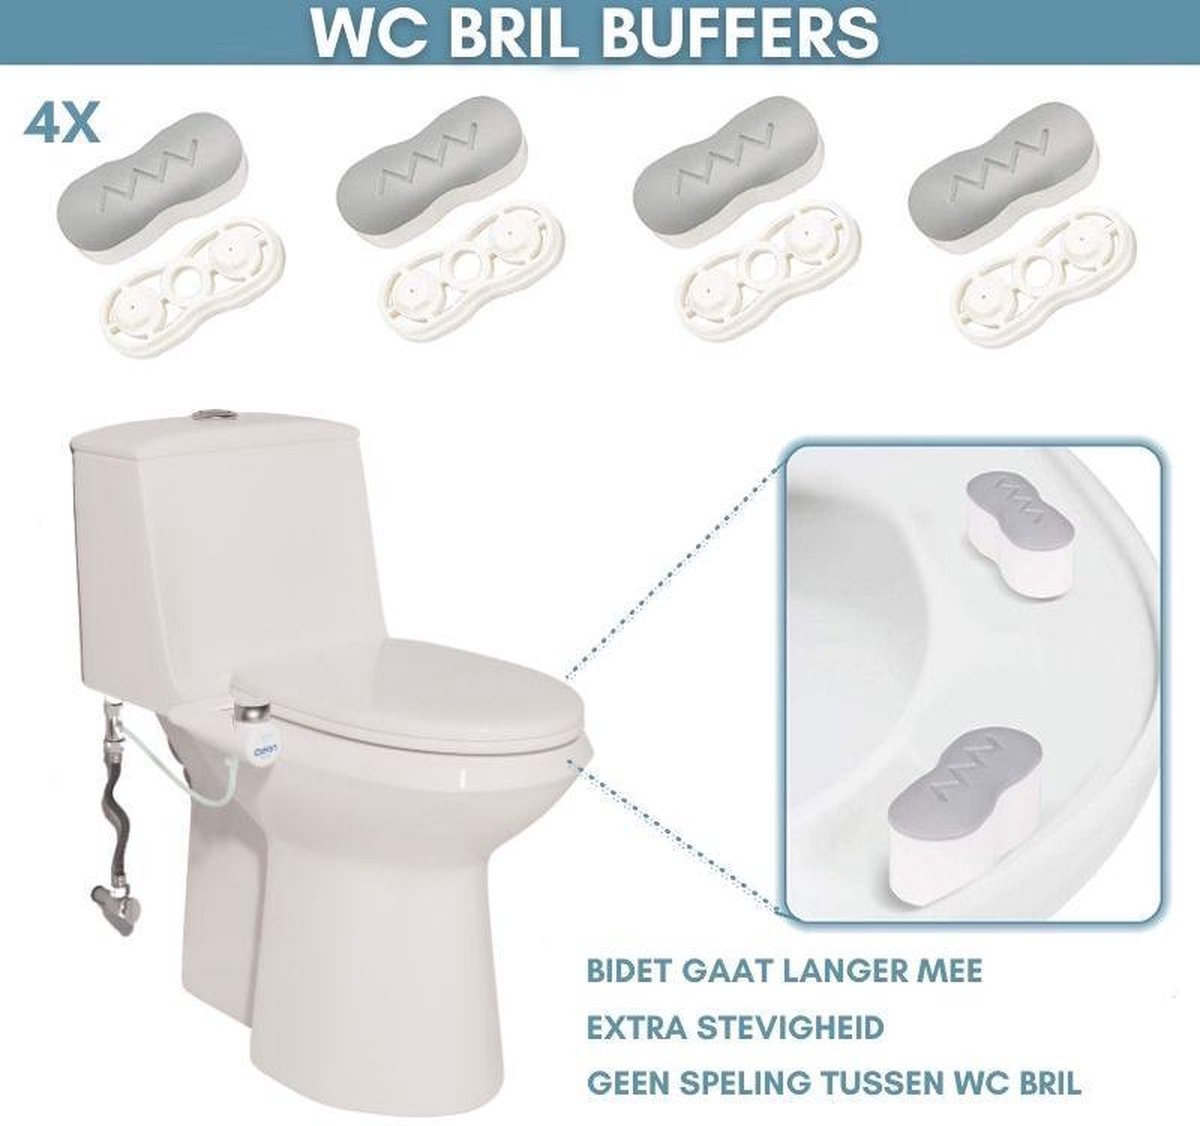 Bidet WC-bril Buffers - Toiletzitting Buffers - Verleng Levensduur Bidet |  bol.com